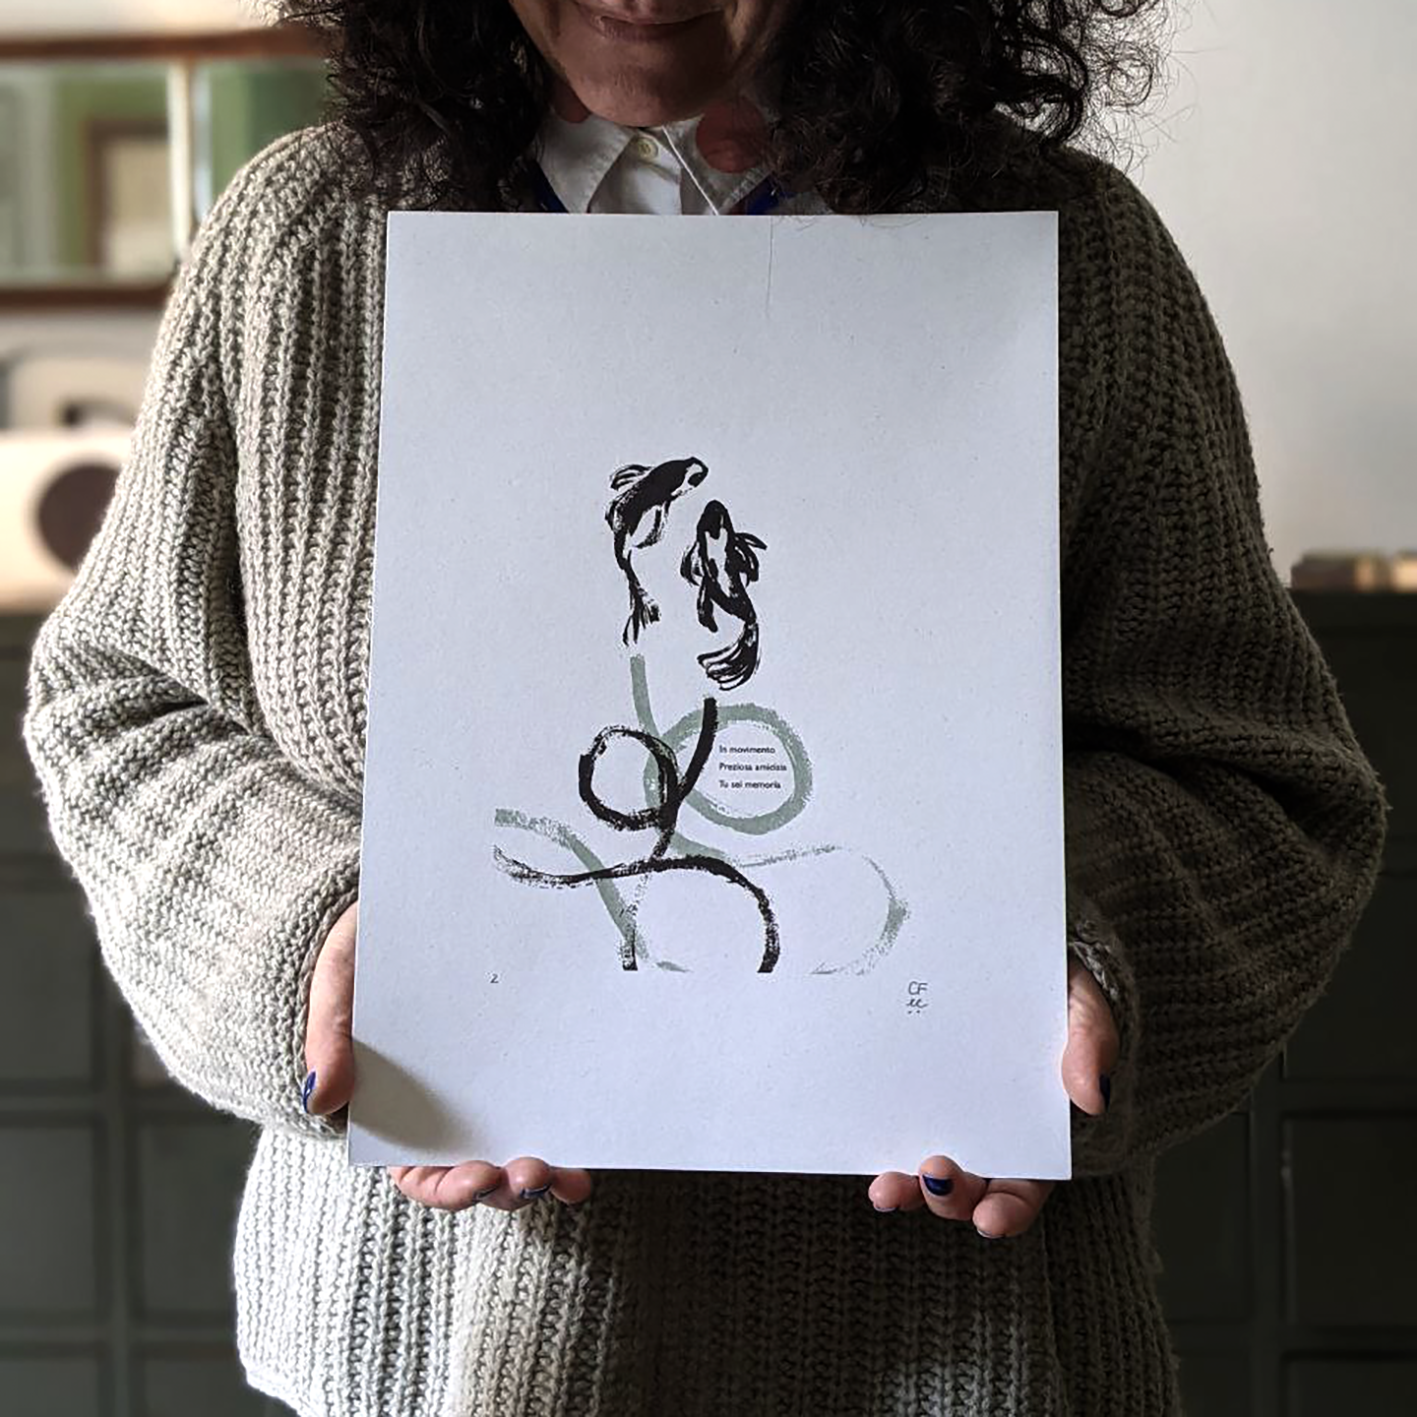 Stampa Poetica haiku - Cinzia Franceschini illustra "In movimento"